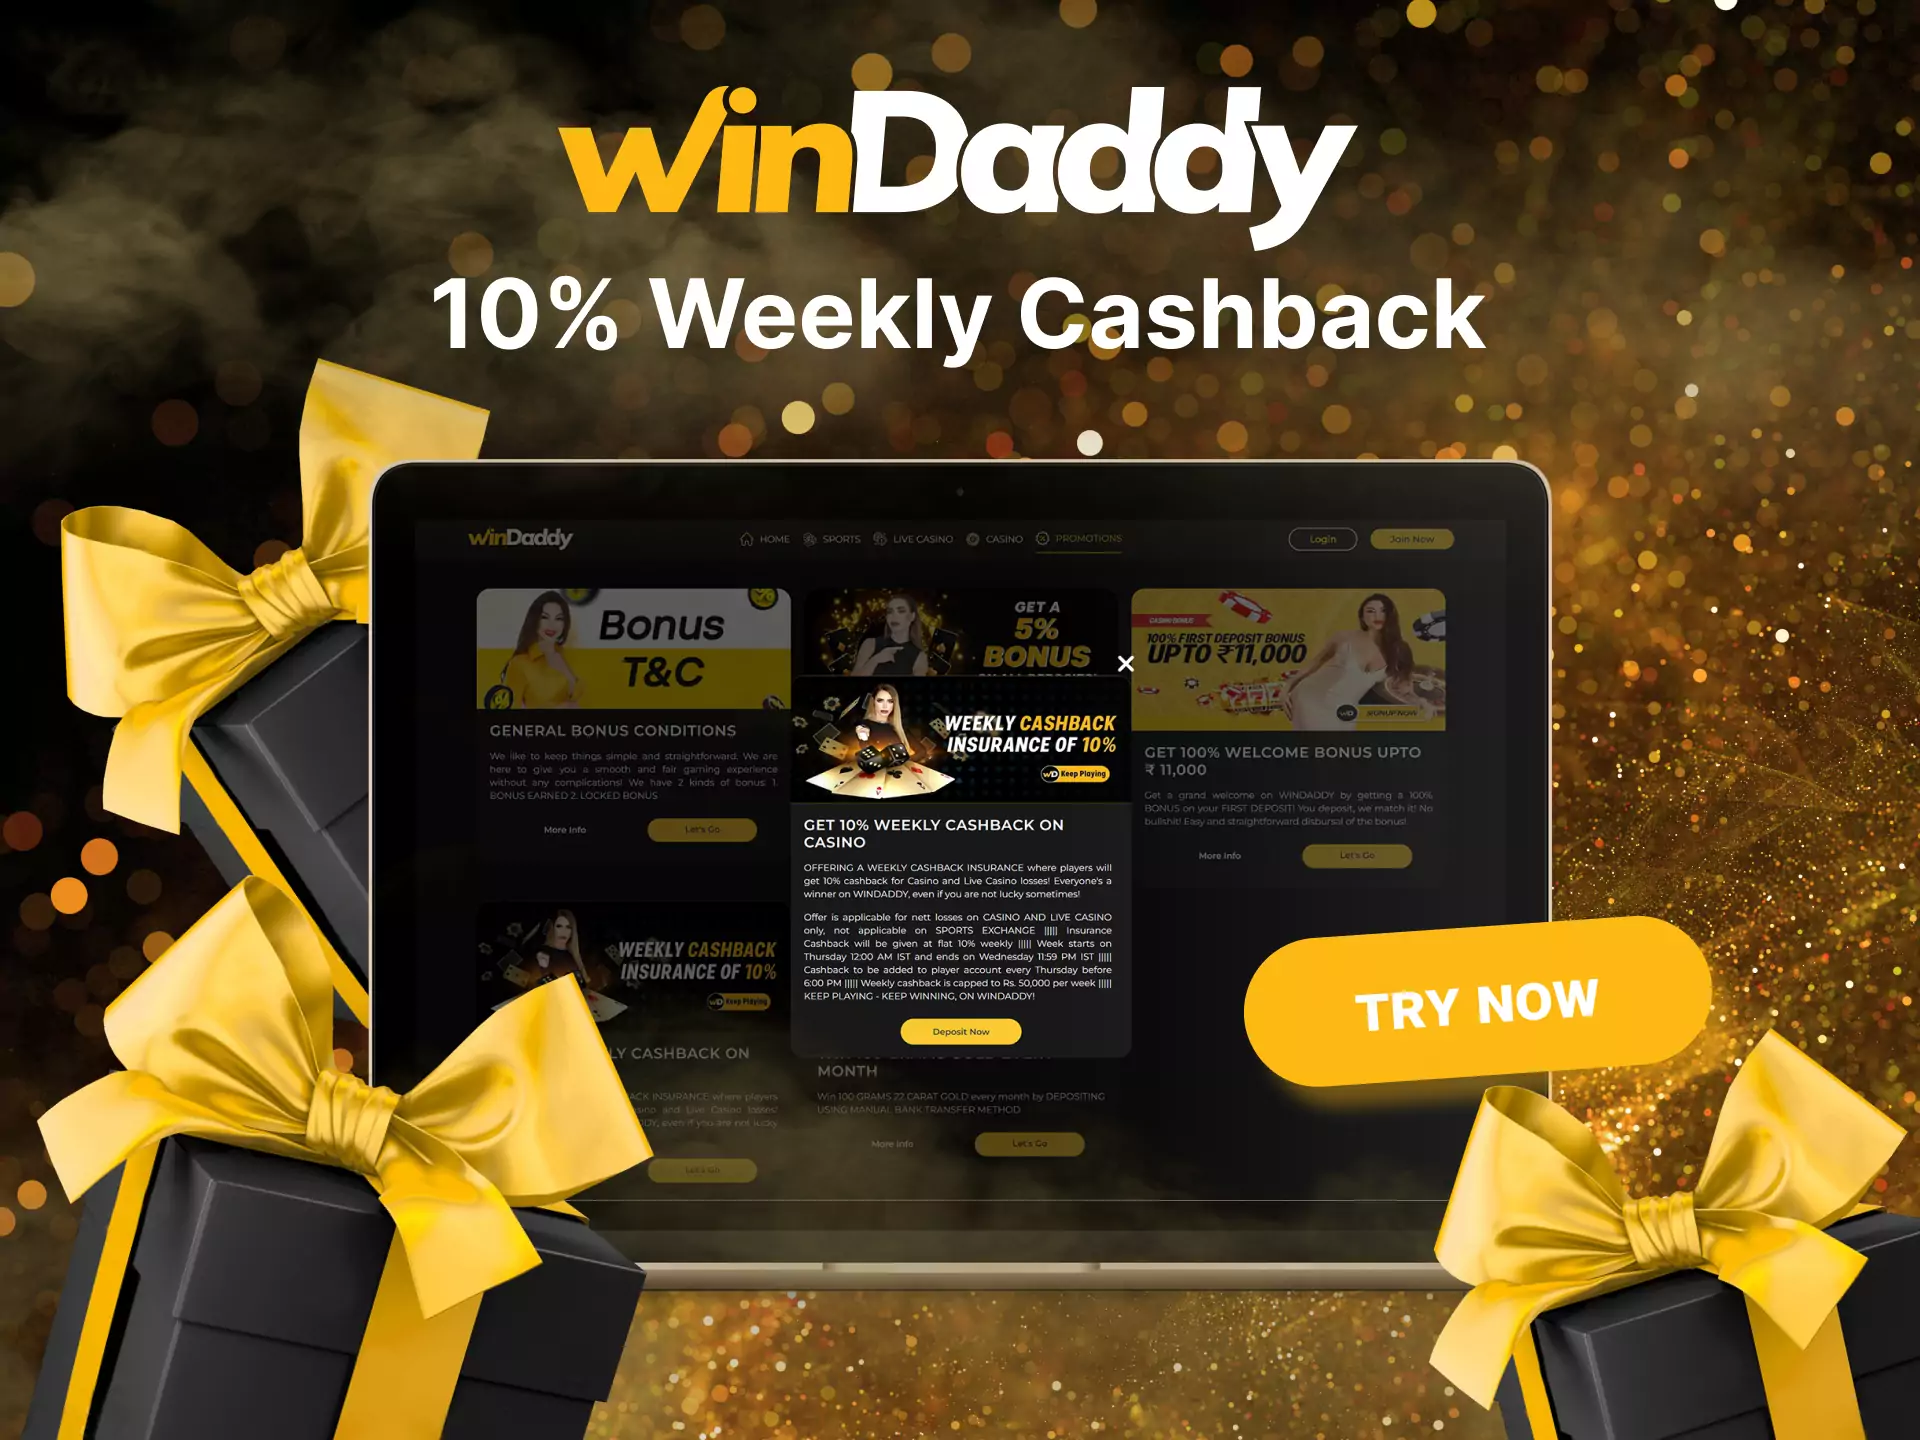 Try 10% weekly cashback bonus on the Windaddy platform.